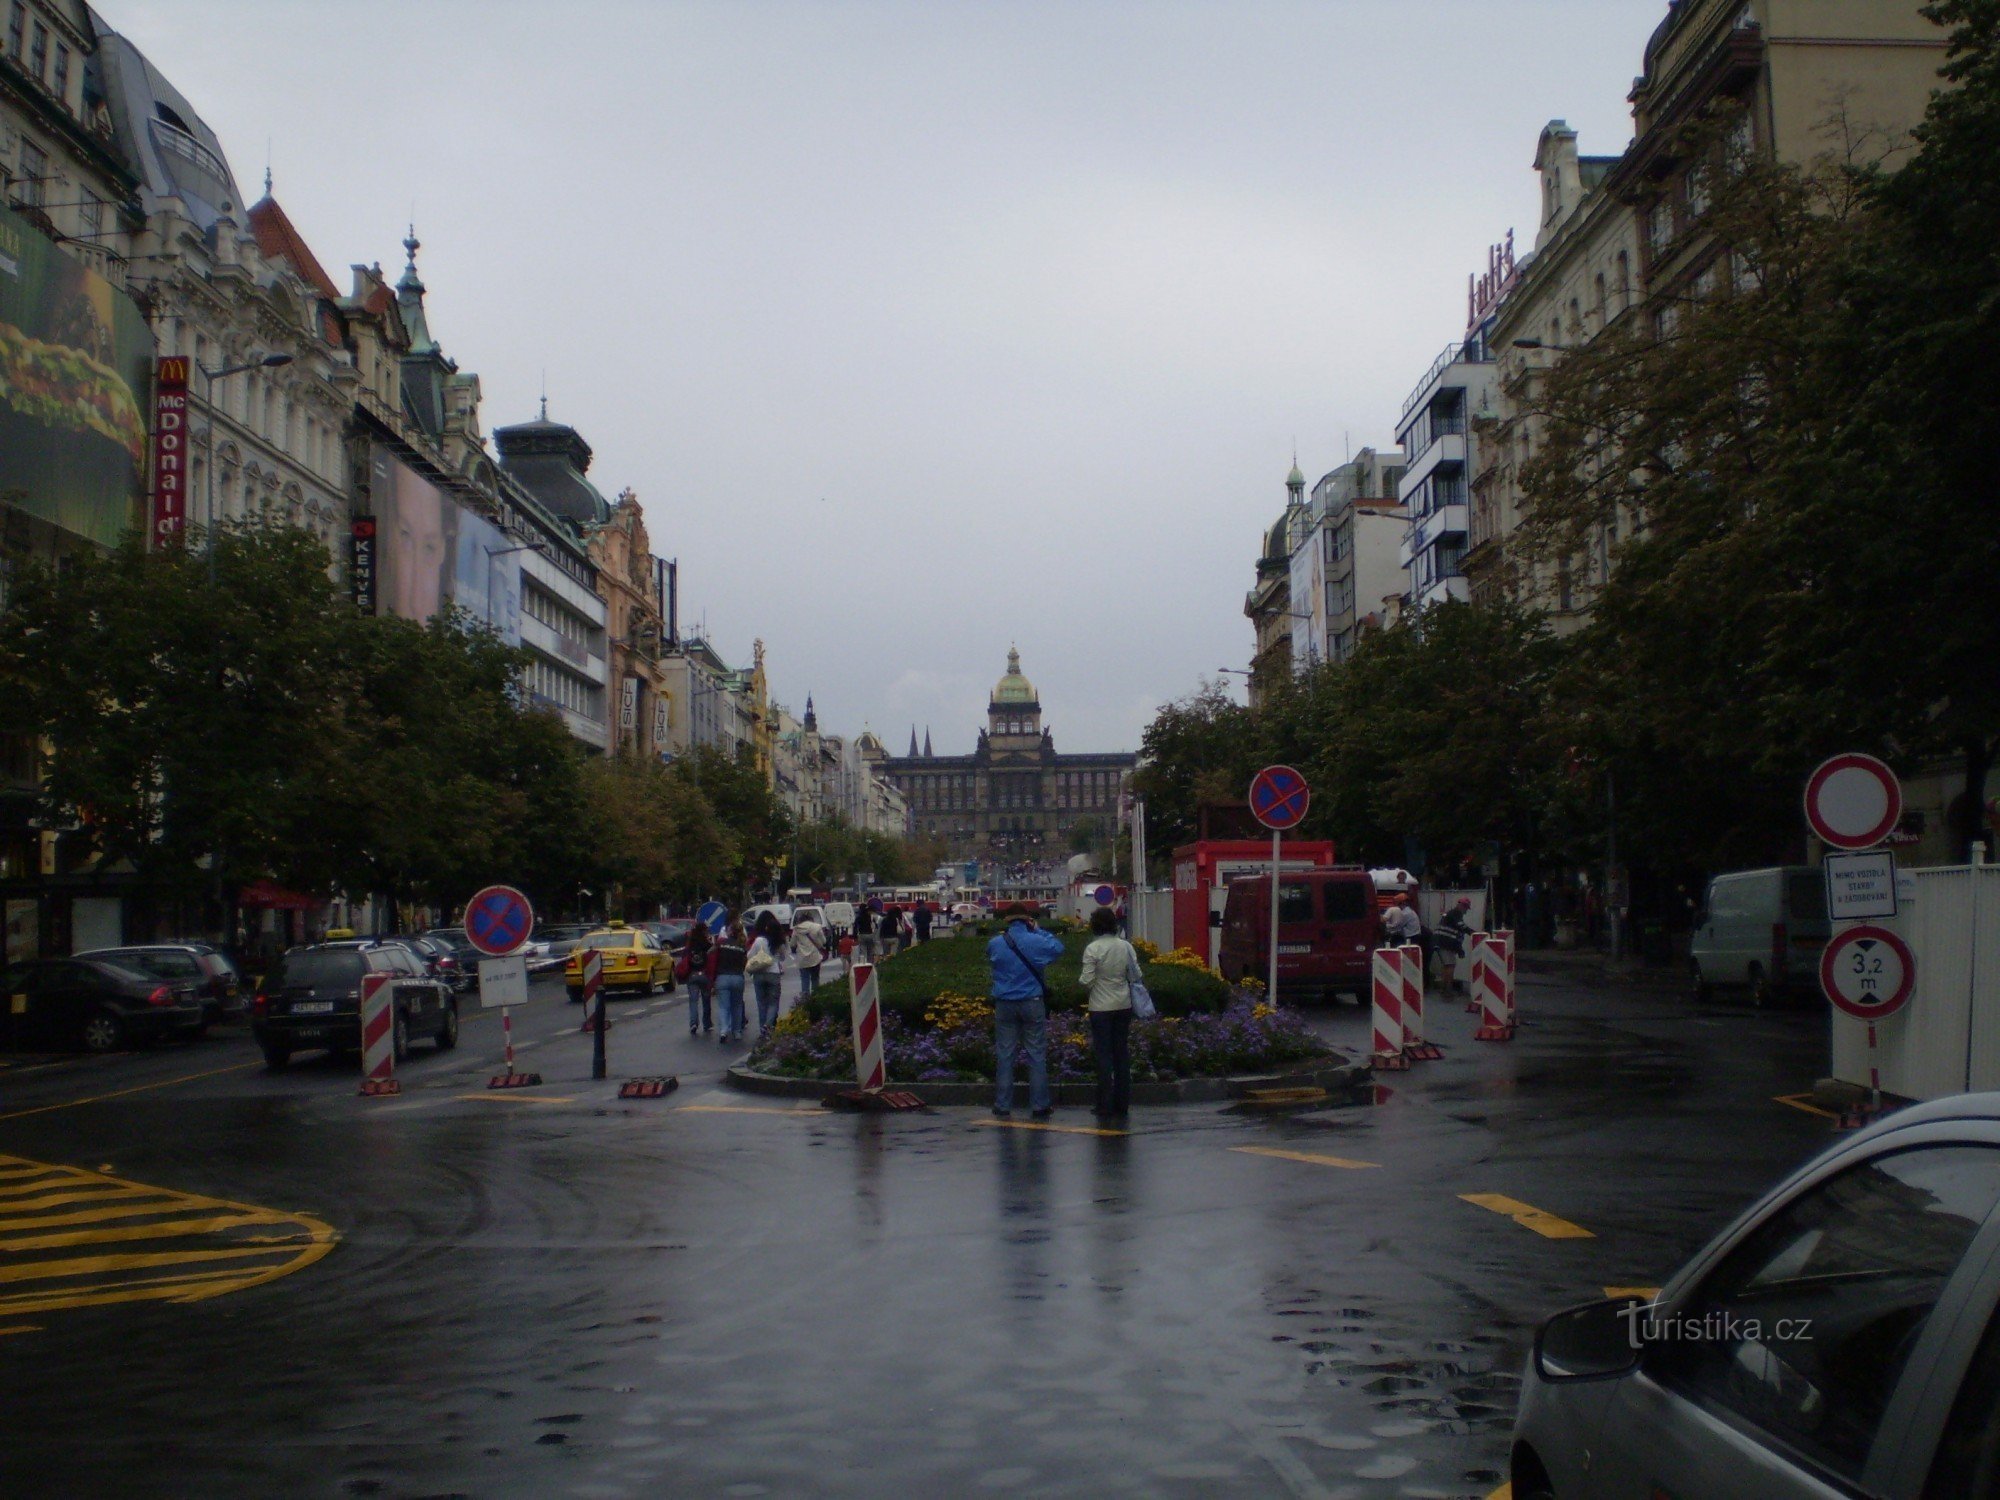 View of Wenceslas Square